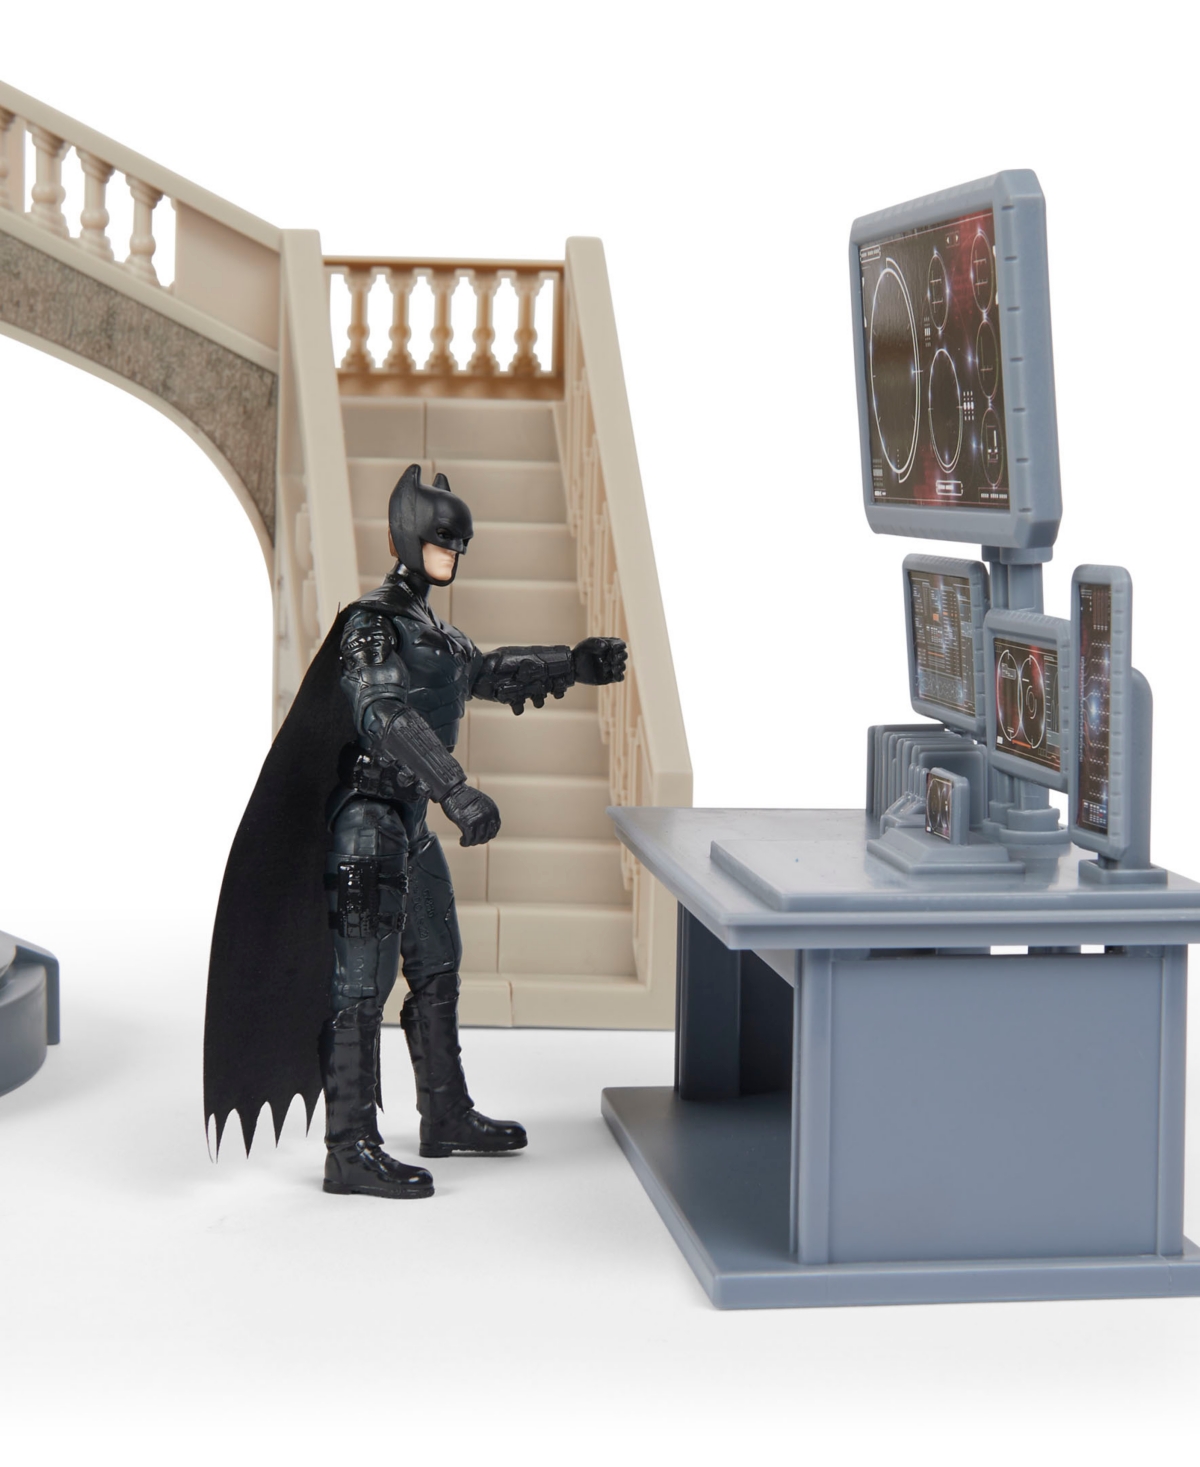 Shop Dc Comics Batman Batcave With Exclusive Batman And Penguin Action Figures And Batcycle, In Multi-color